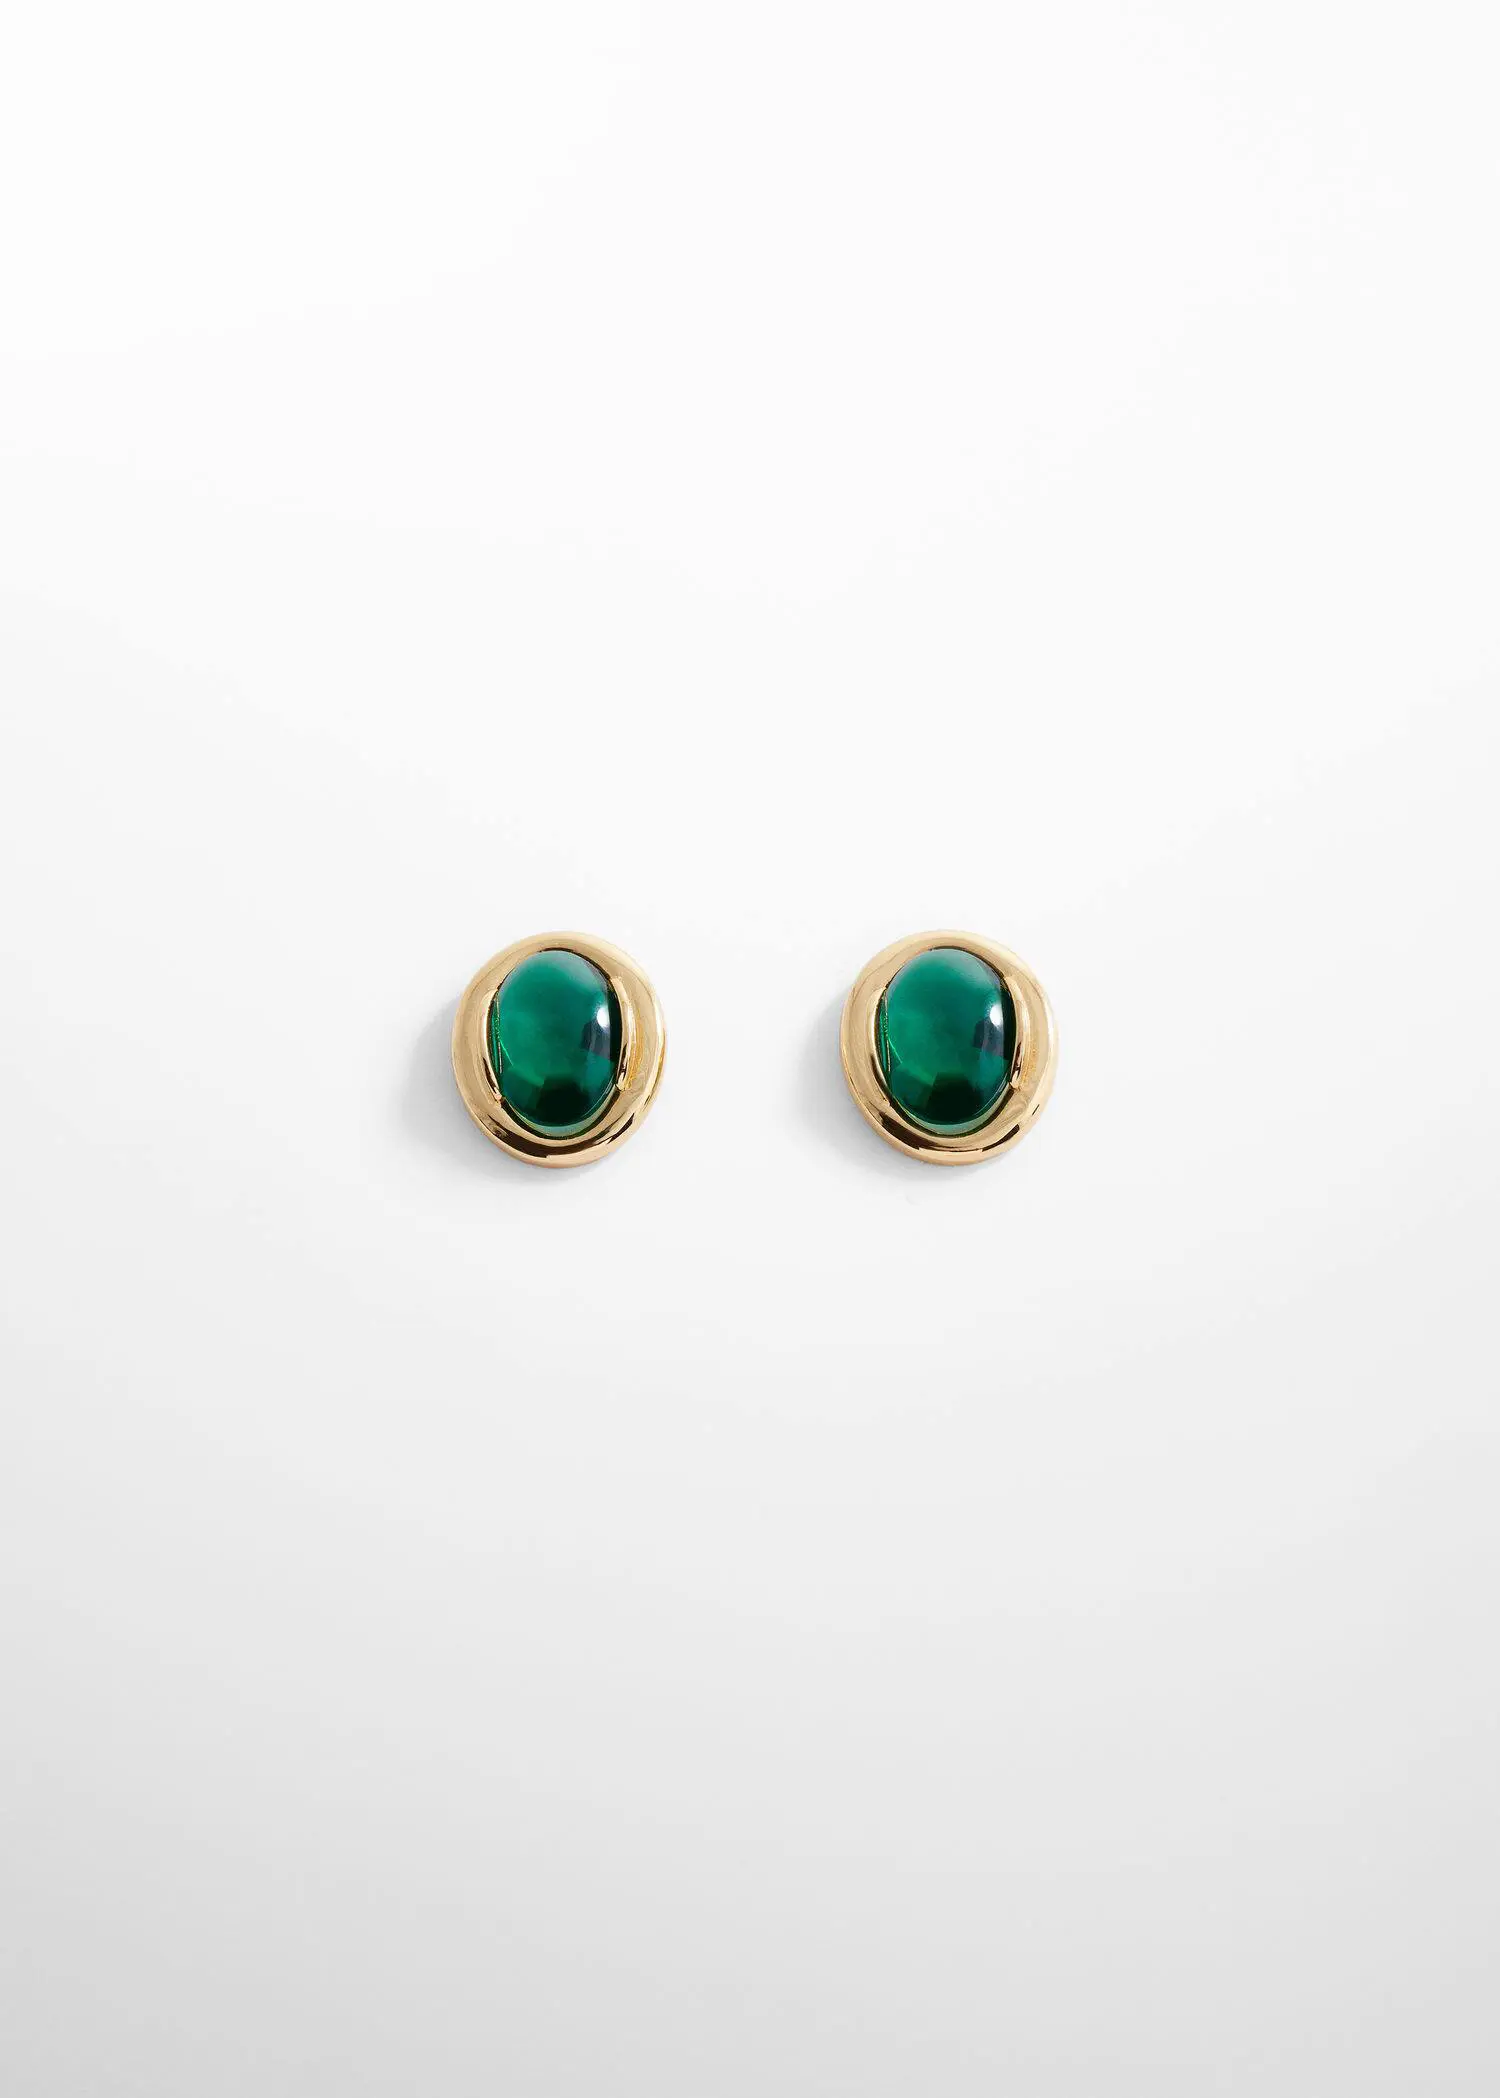 Mango Stones earrings. 2